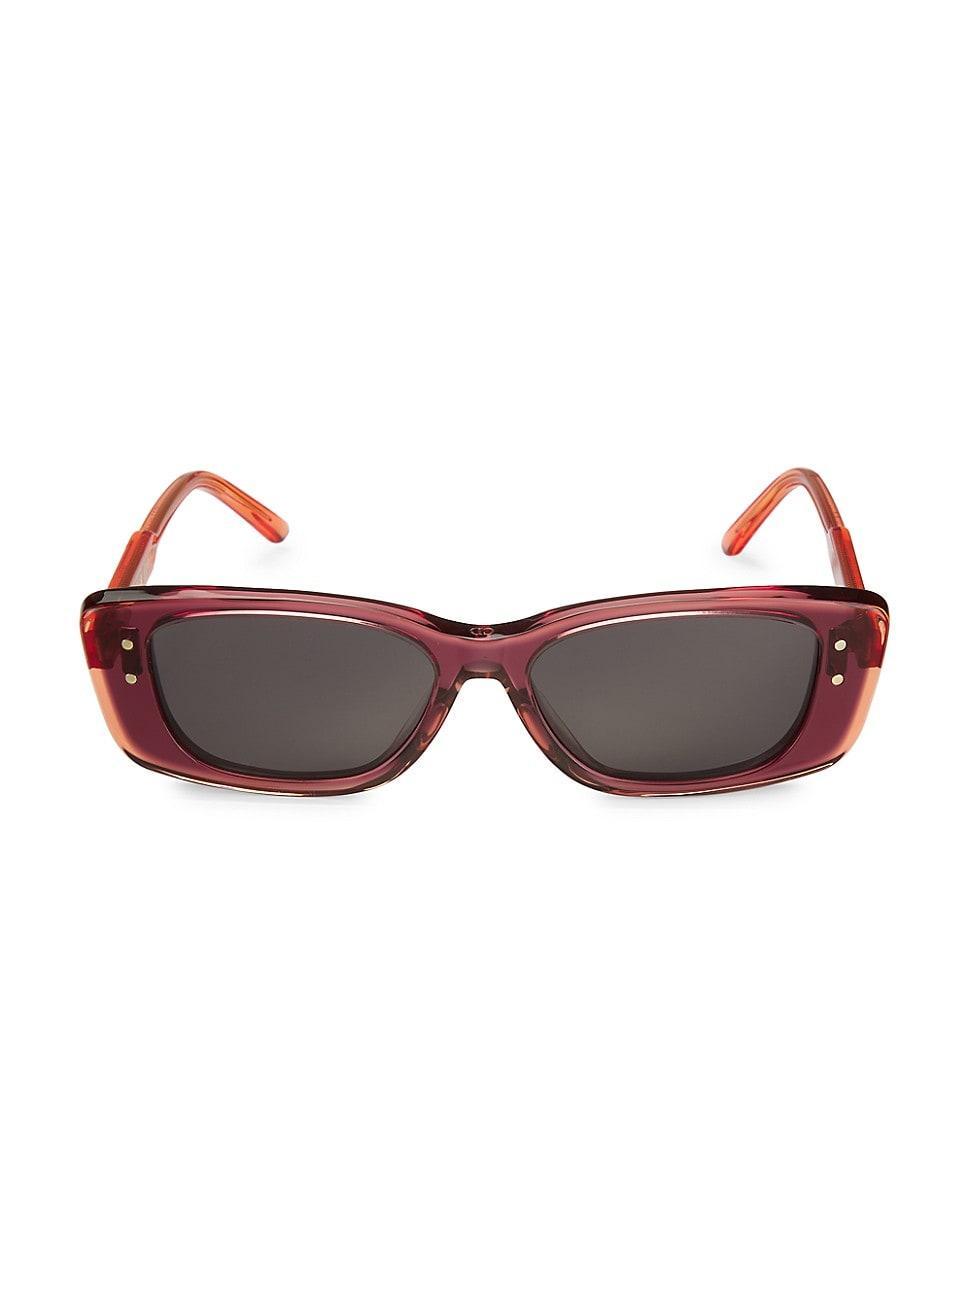 The Diorhighlight S21 53mm Gradient Rectangular Sunglasses Product Image